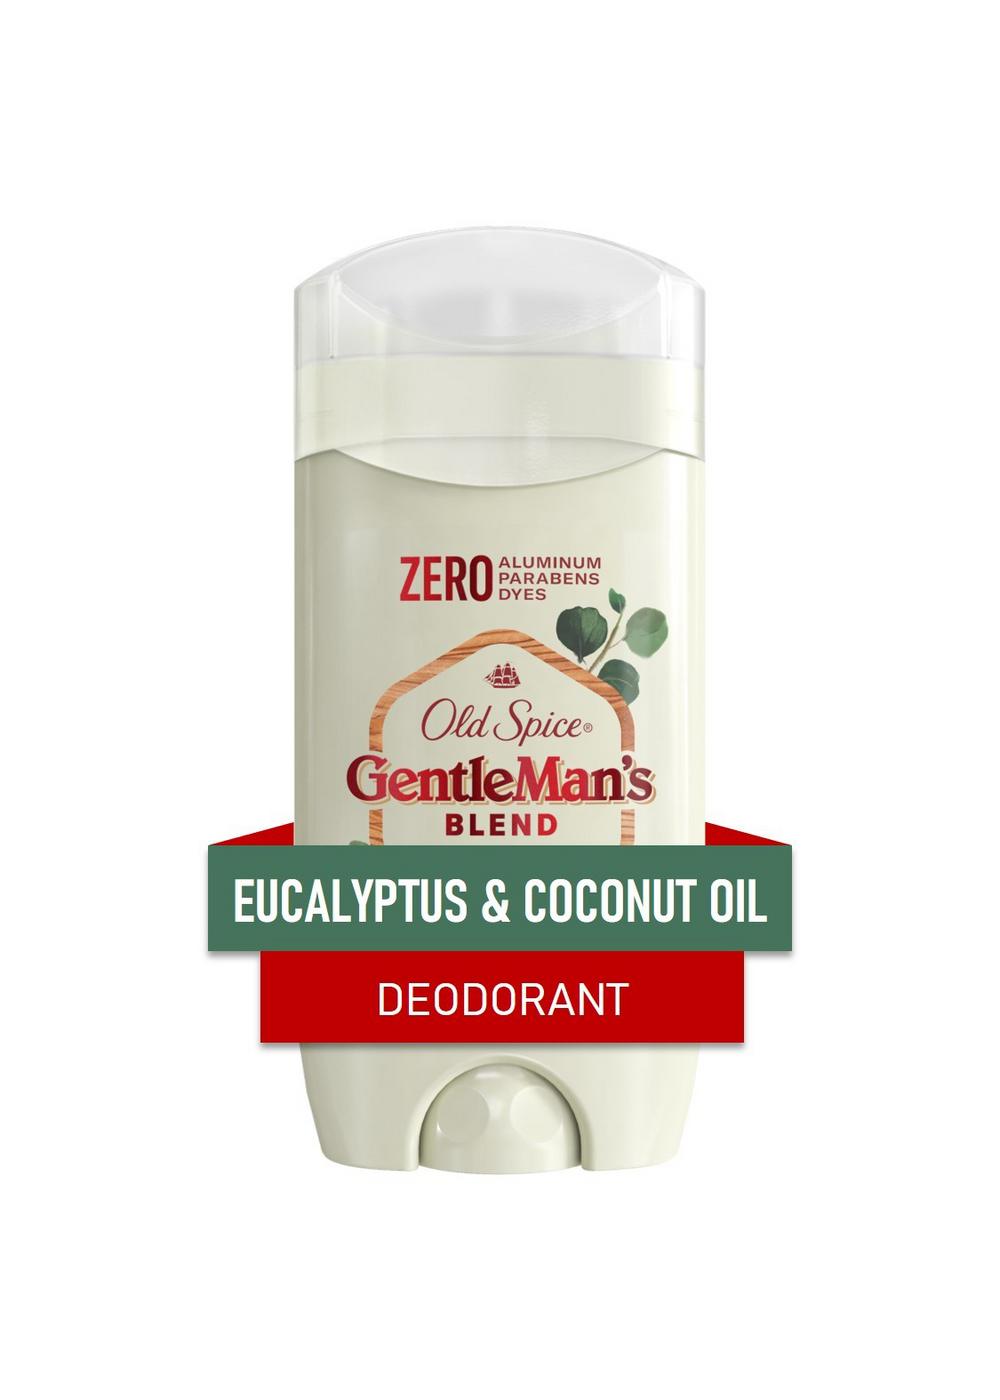 Old Spice Gentleman's Blend Deodorant - Eucalyptus & Coconut Oil; image 8 of 9